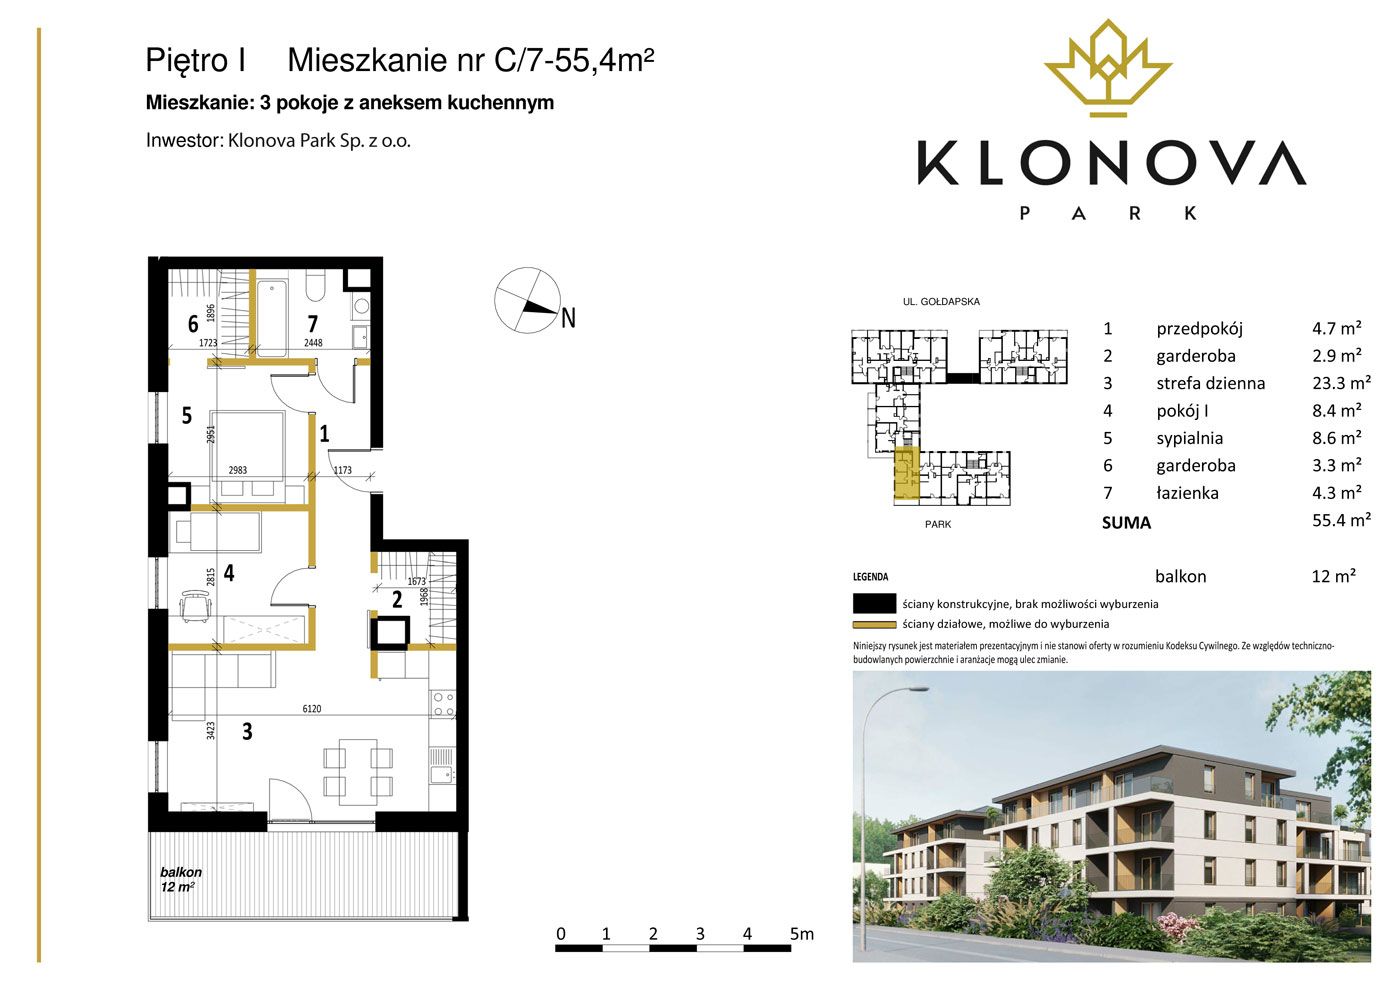 Apartamenty Klonova Park - Plan mieszkania C/7